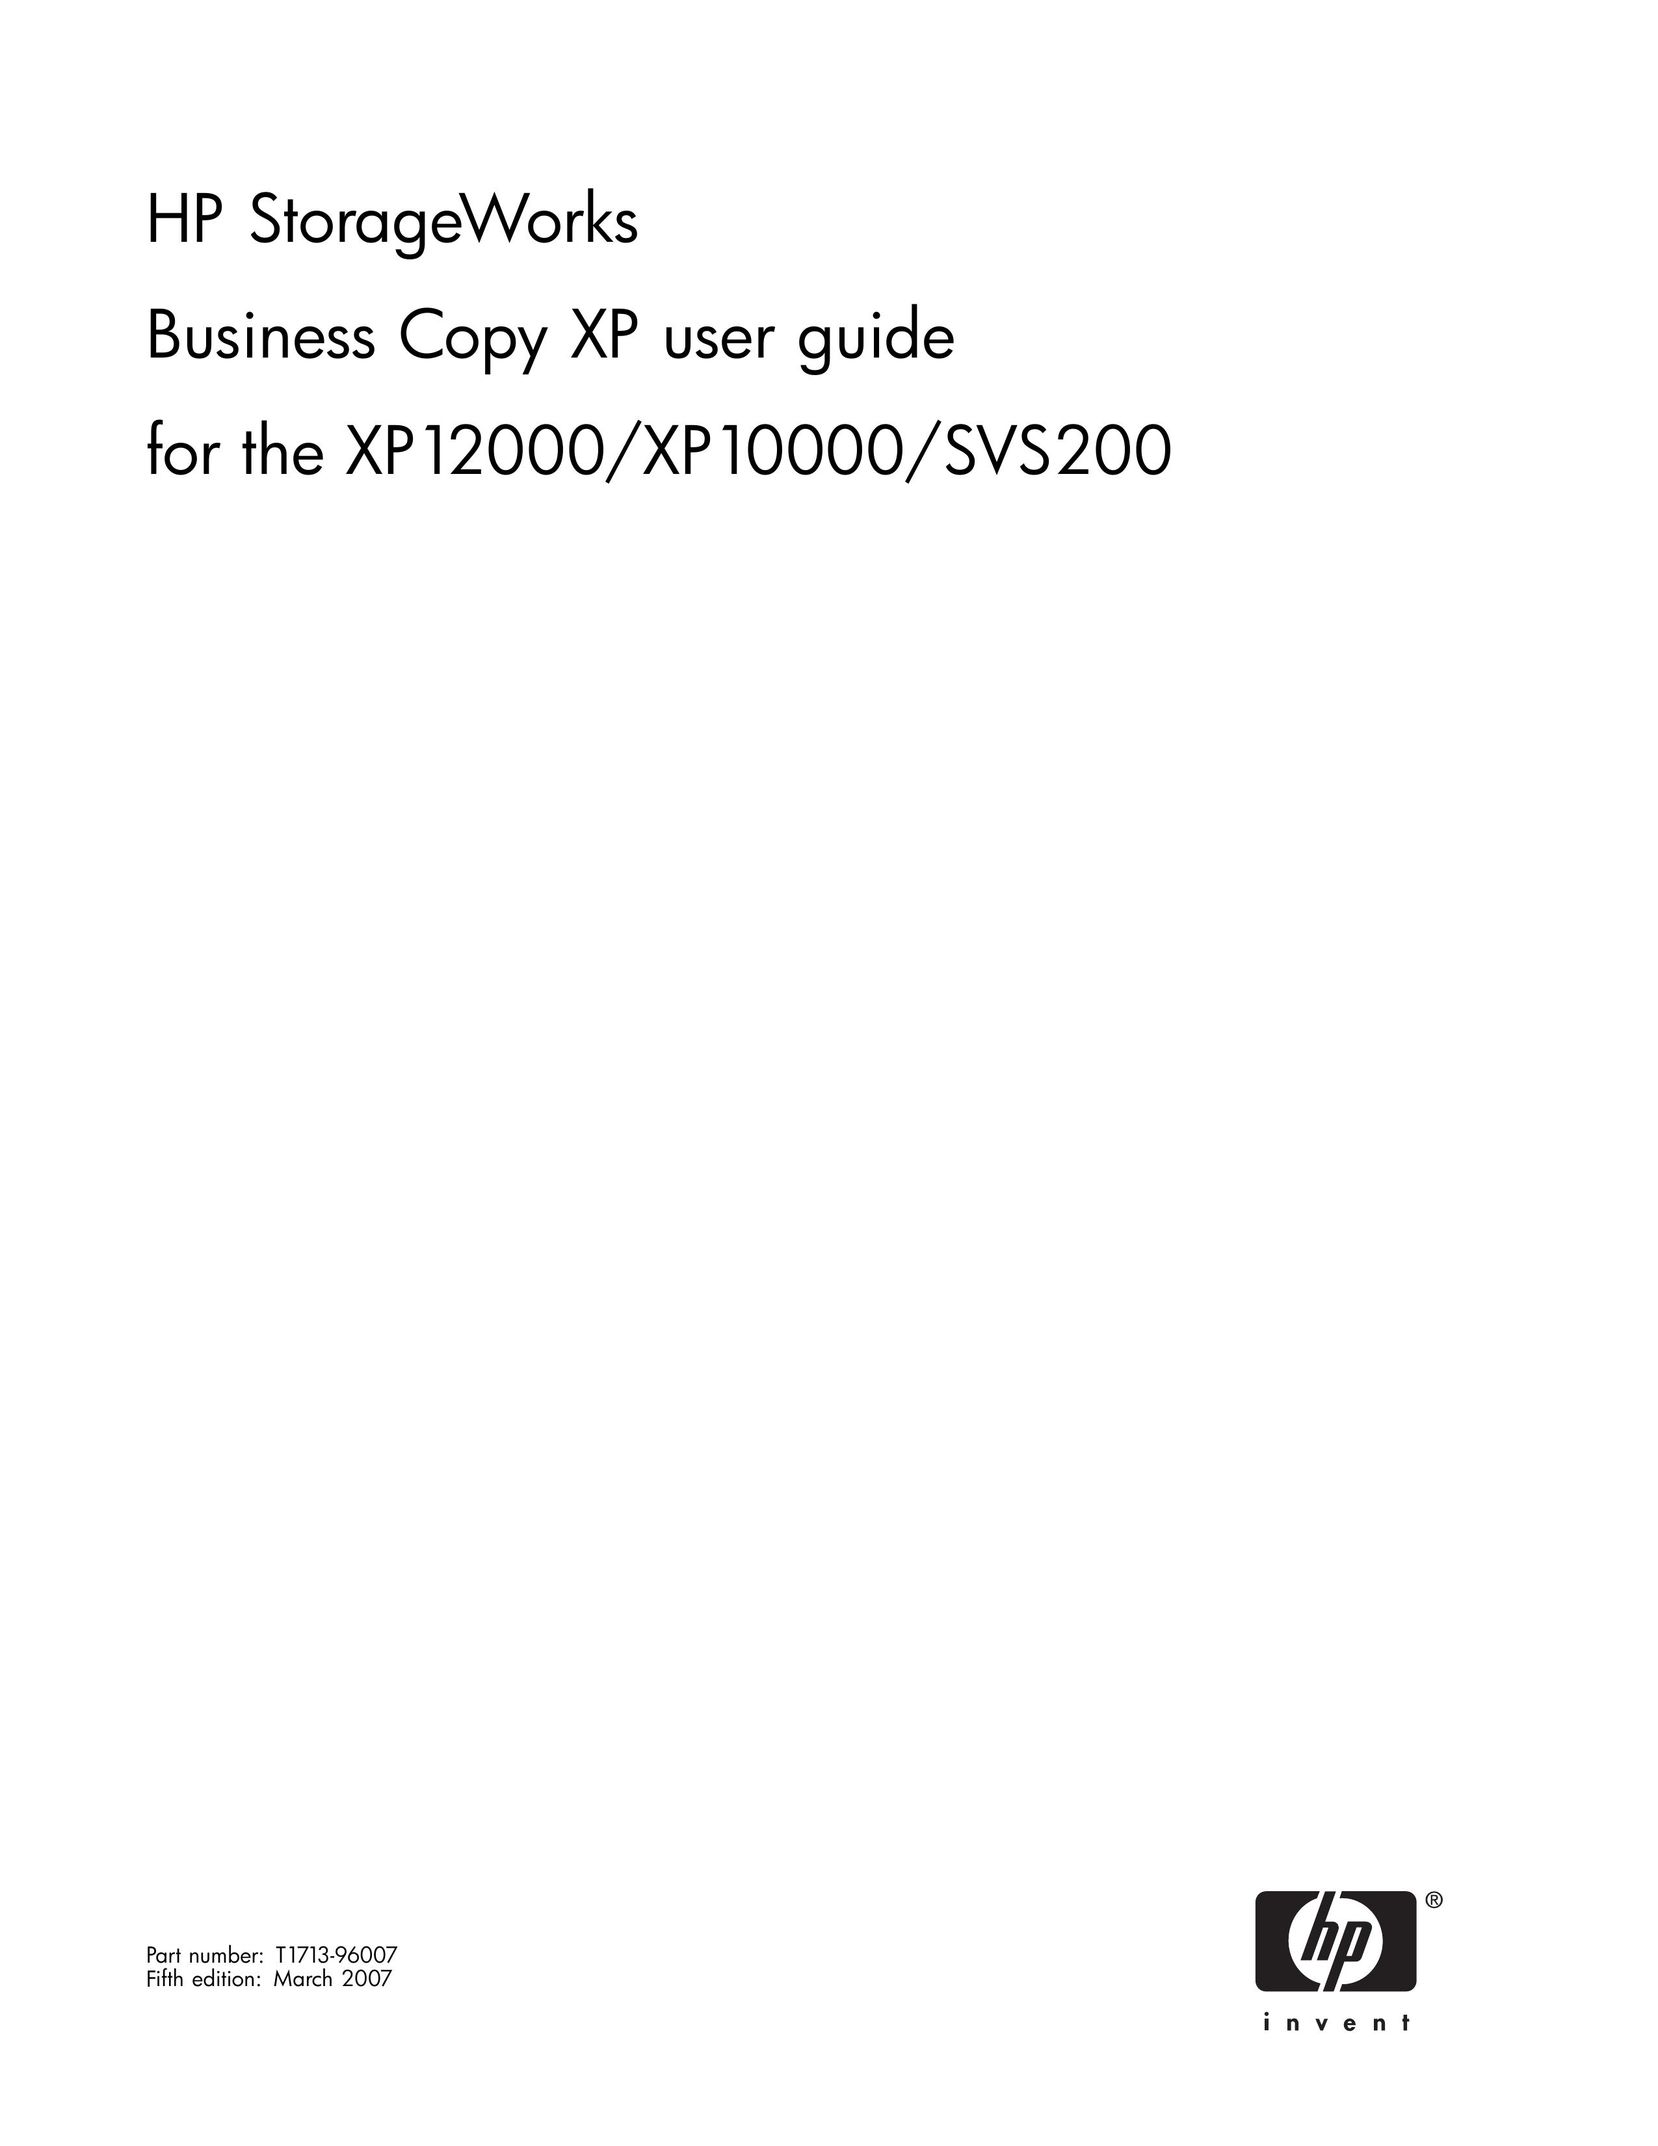 HP (Hewlett-Packard) SVS200 Tool Storage User Manual